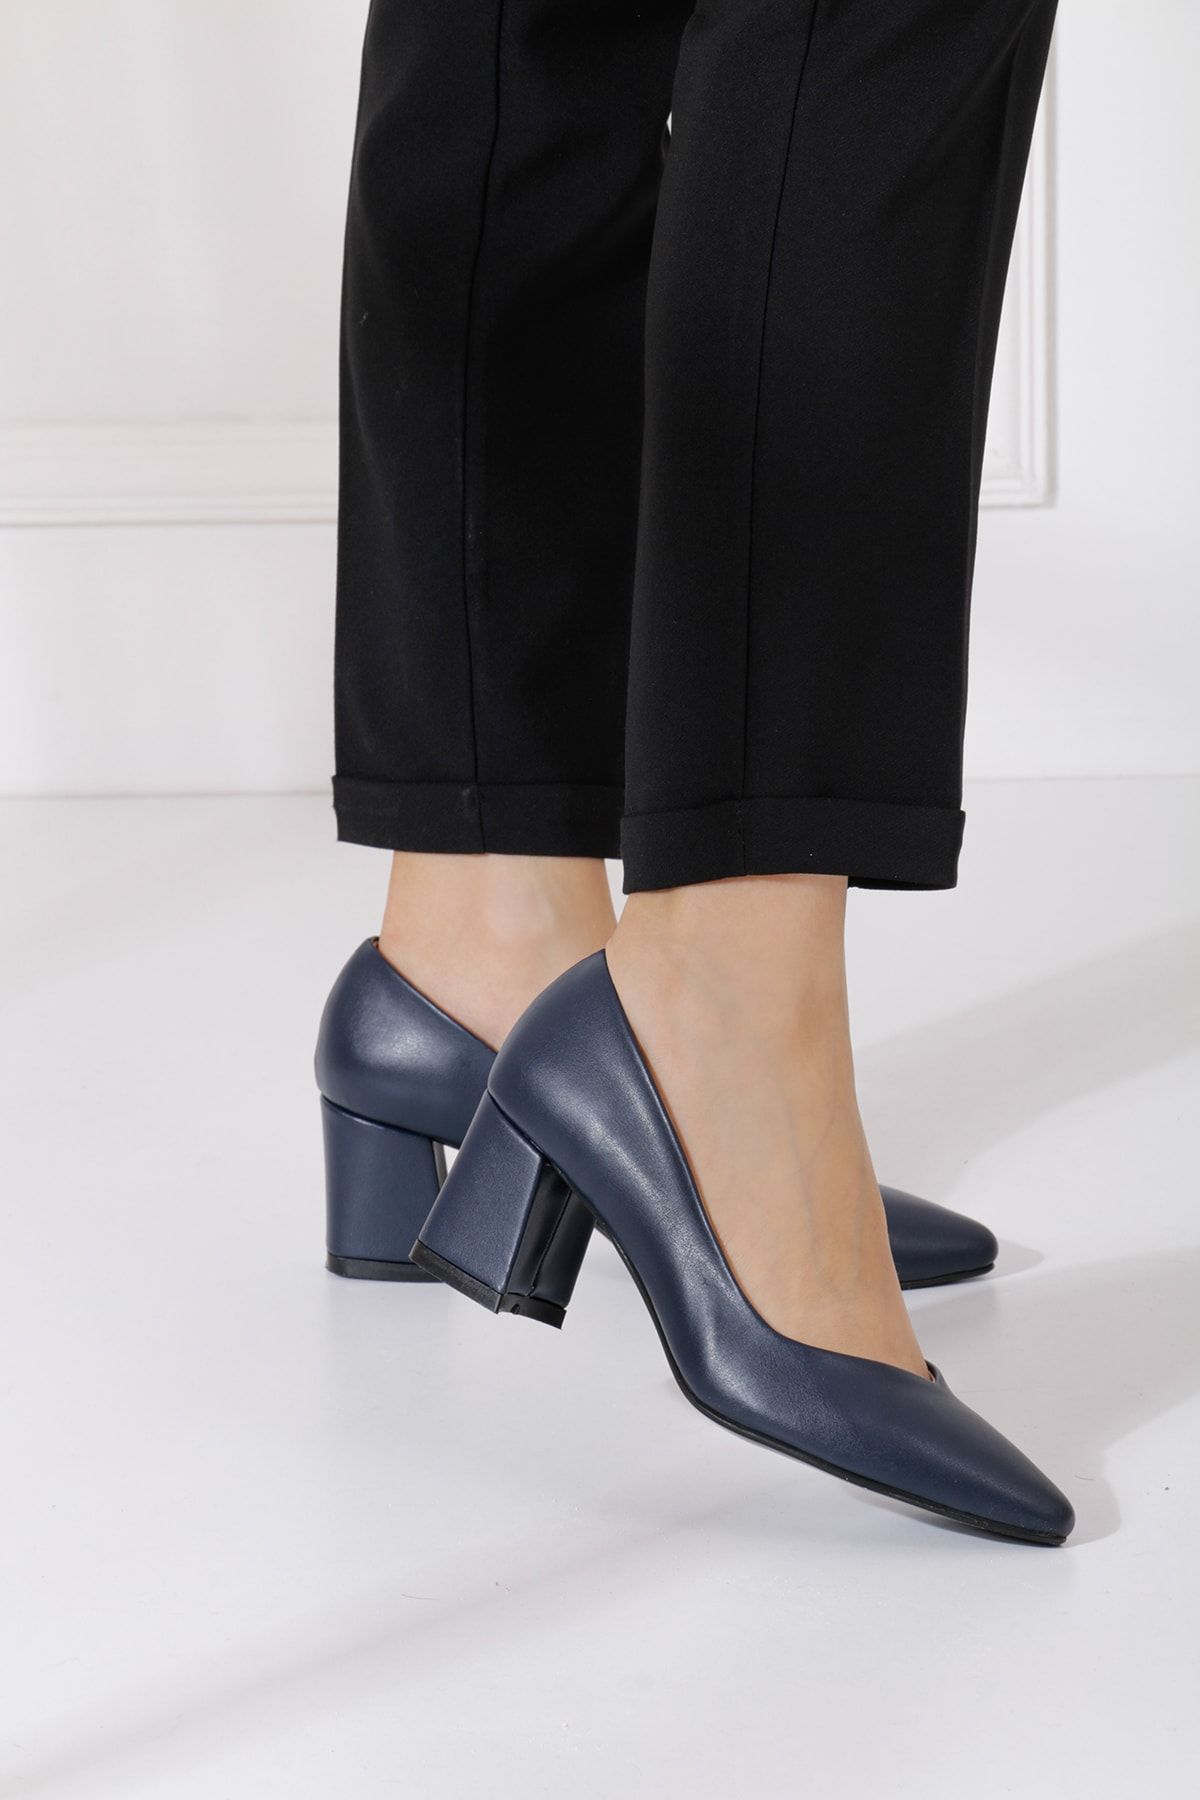 FORS SHOES Lacivert Cilt Kadın Topuklu Ayakkabı 6 Cm